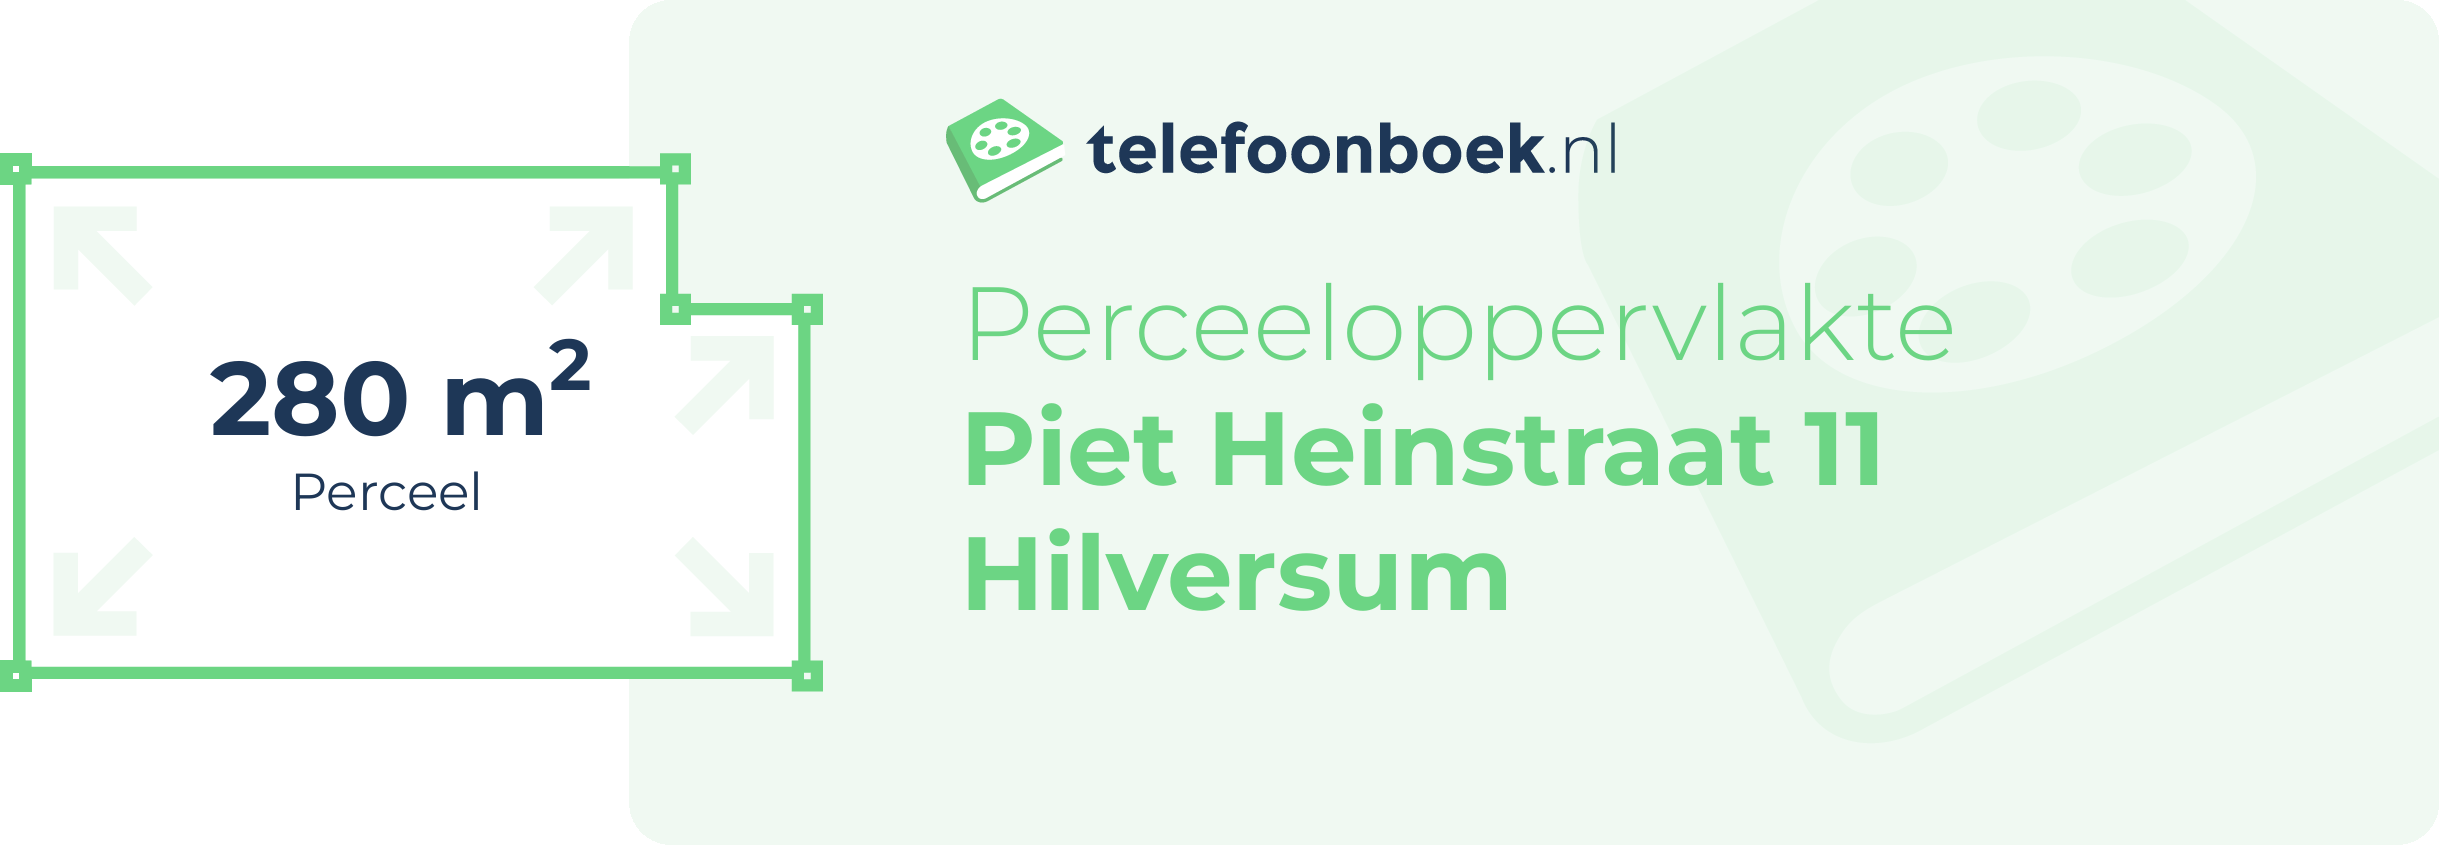 Perceeloppervlakte Piet Heinstraat 11 Hilversum